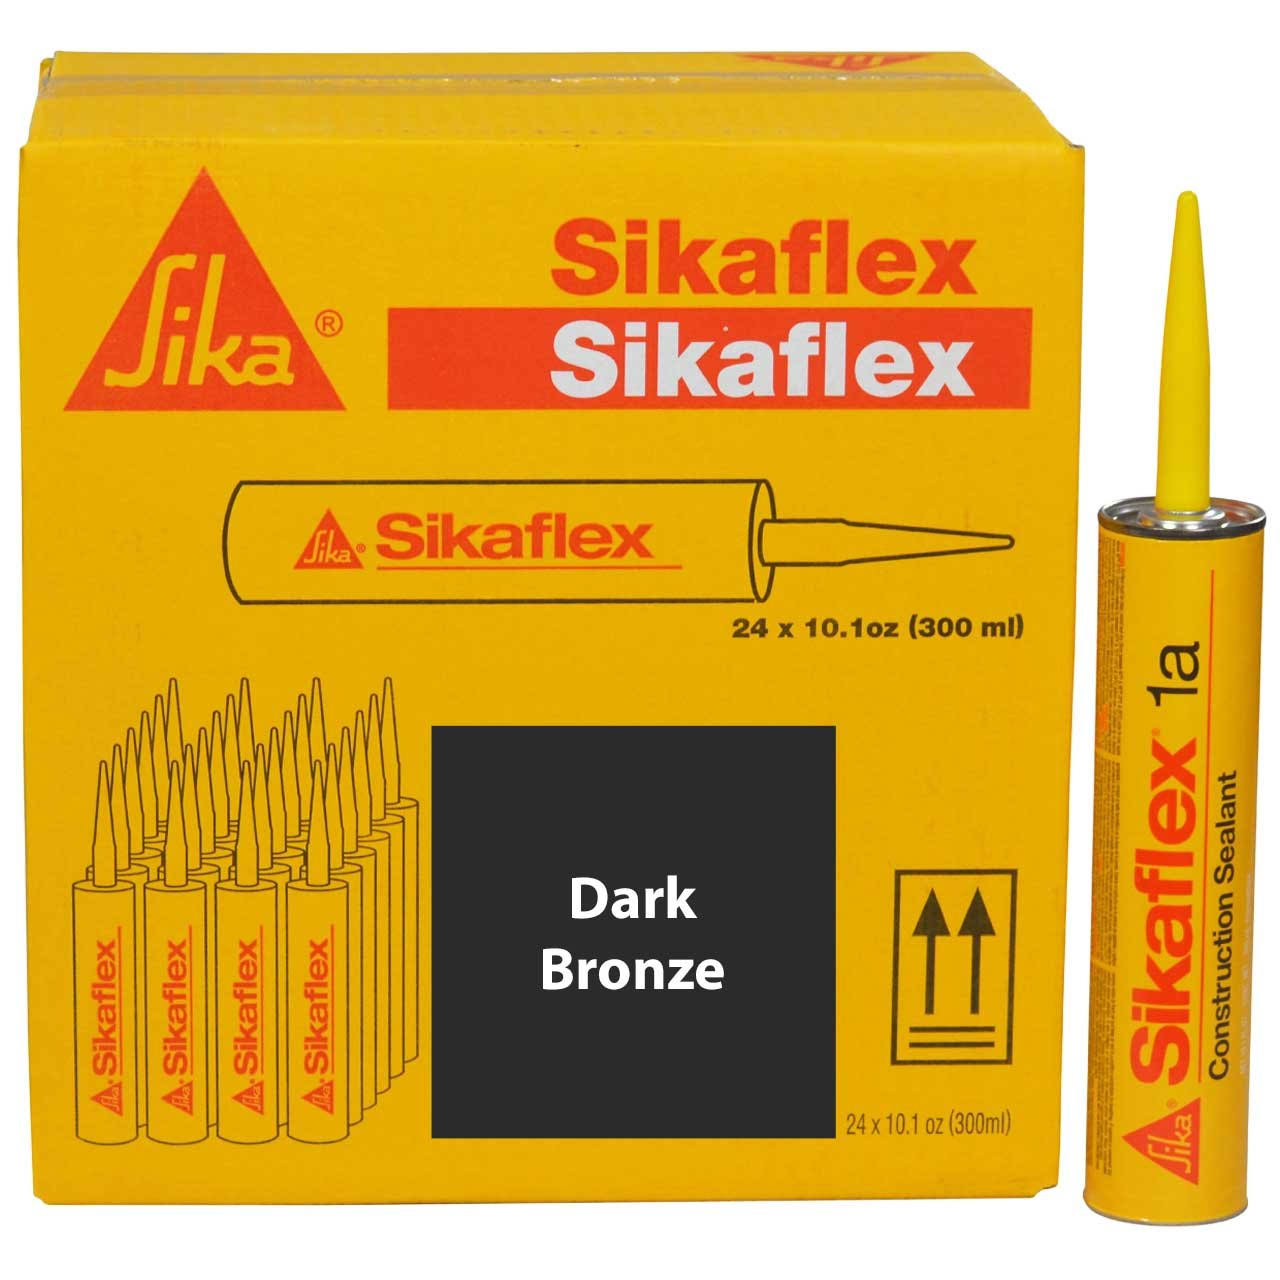 Sikaflex 1A Dark Bronze - 10.1oz. Polyurethane Sealant